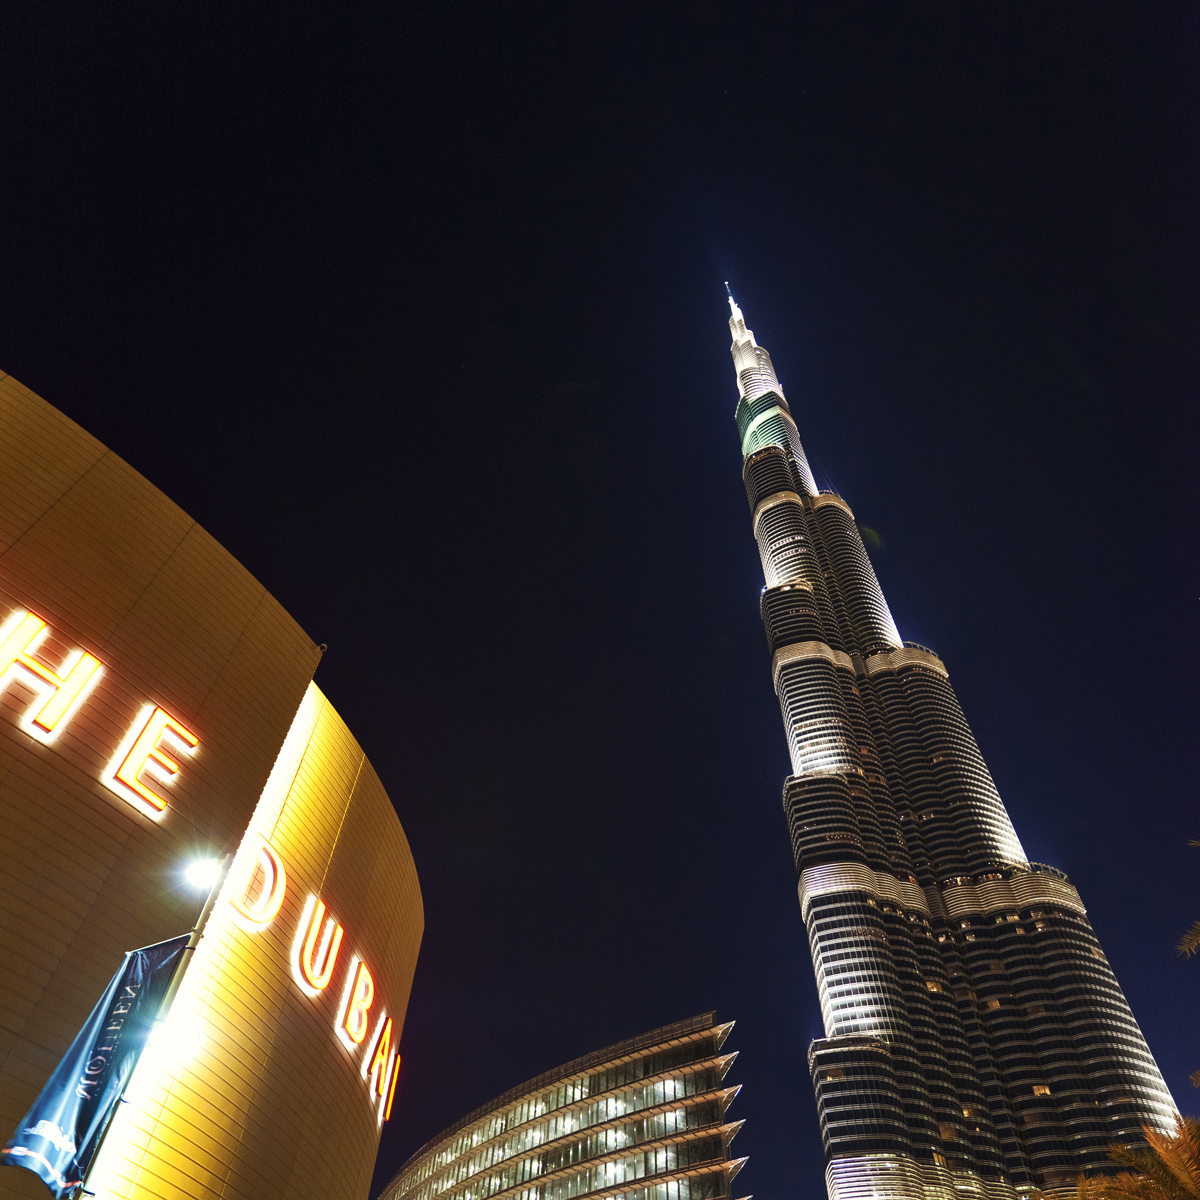 Dubai Mall & Burj Khalifa, Dubai, UAE